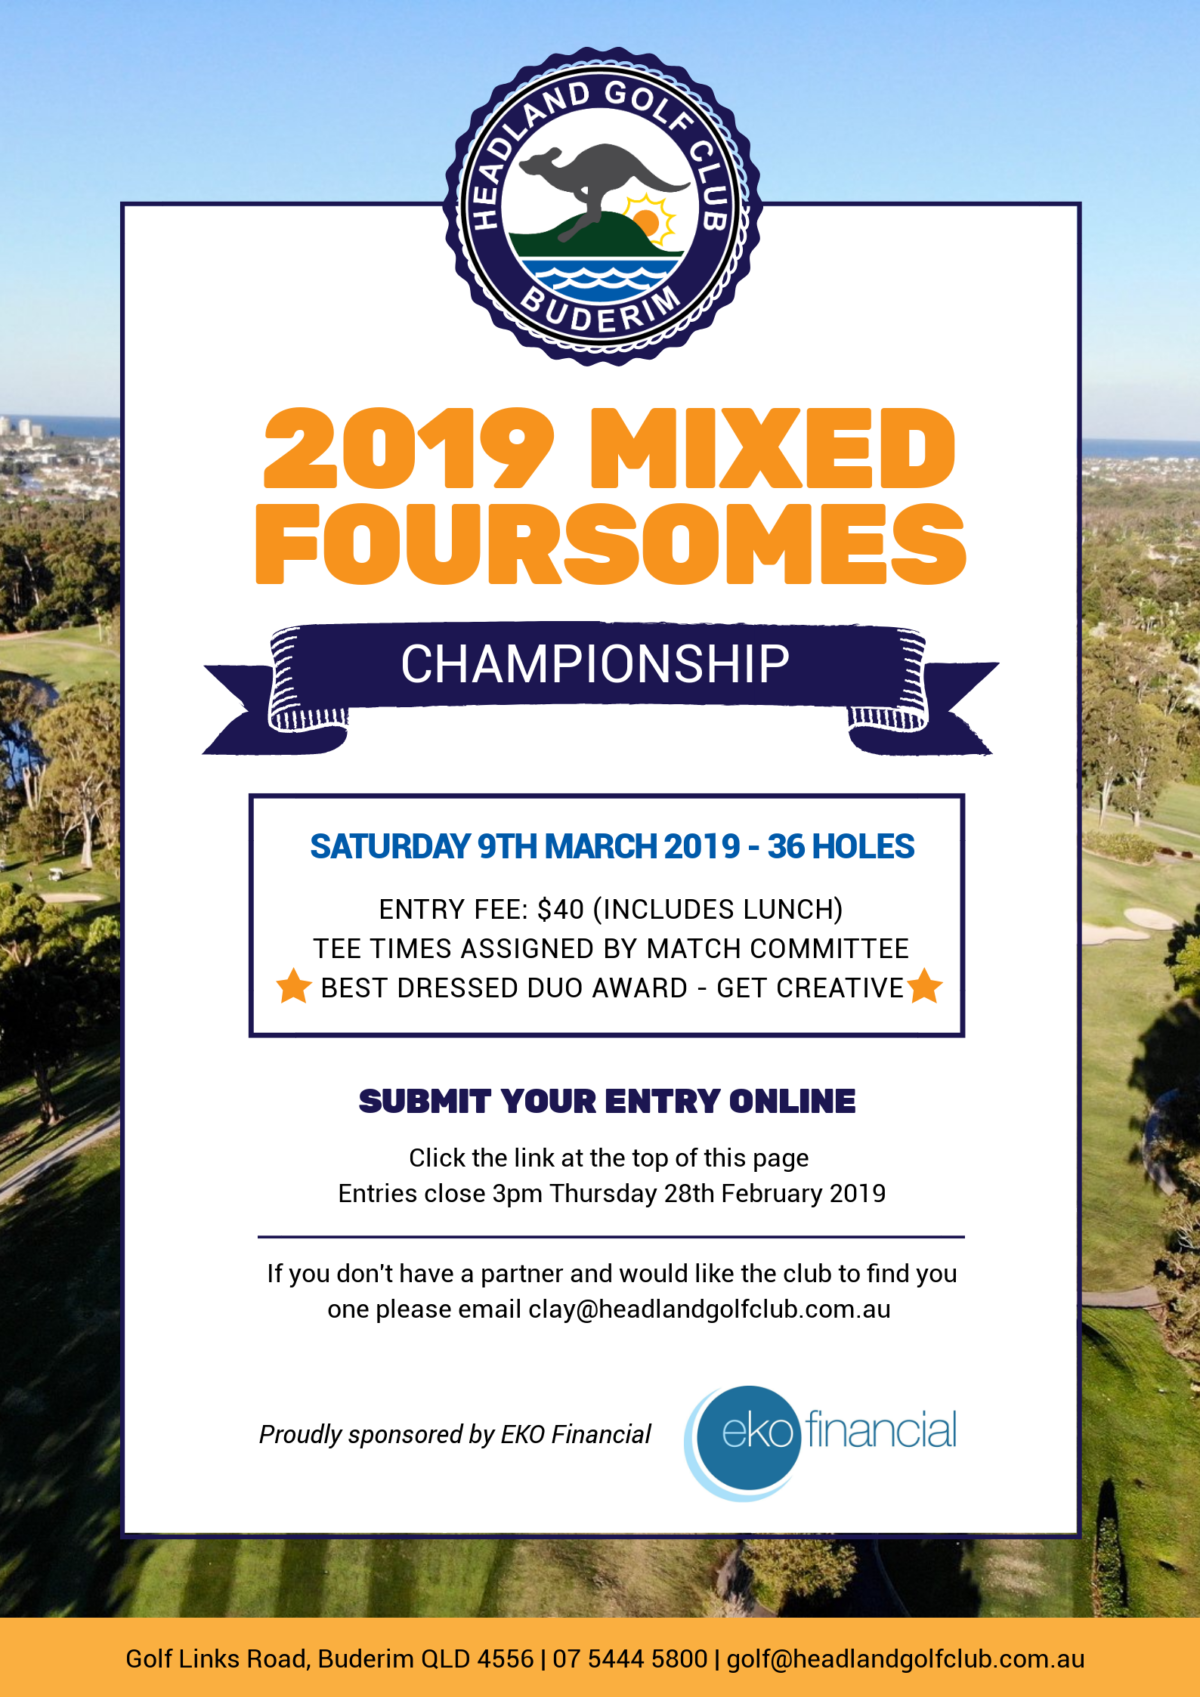 2019 Mixed Foursomes Championship - Headland Golf Club, Sunshine Coast